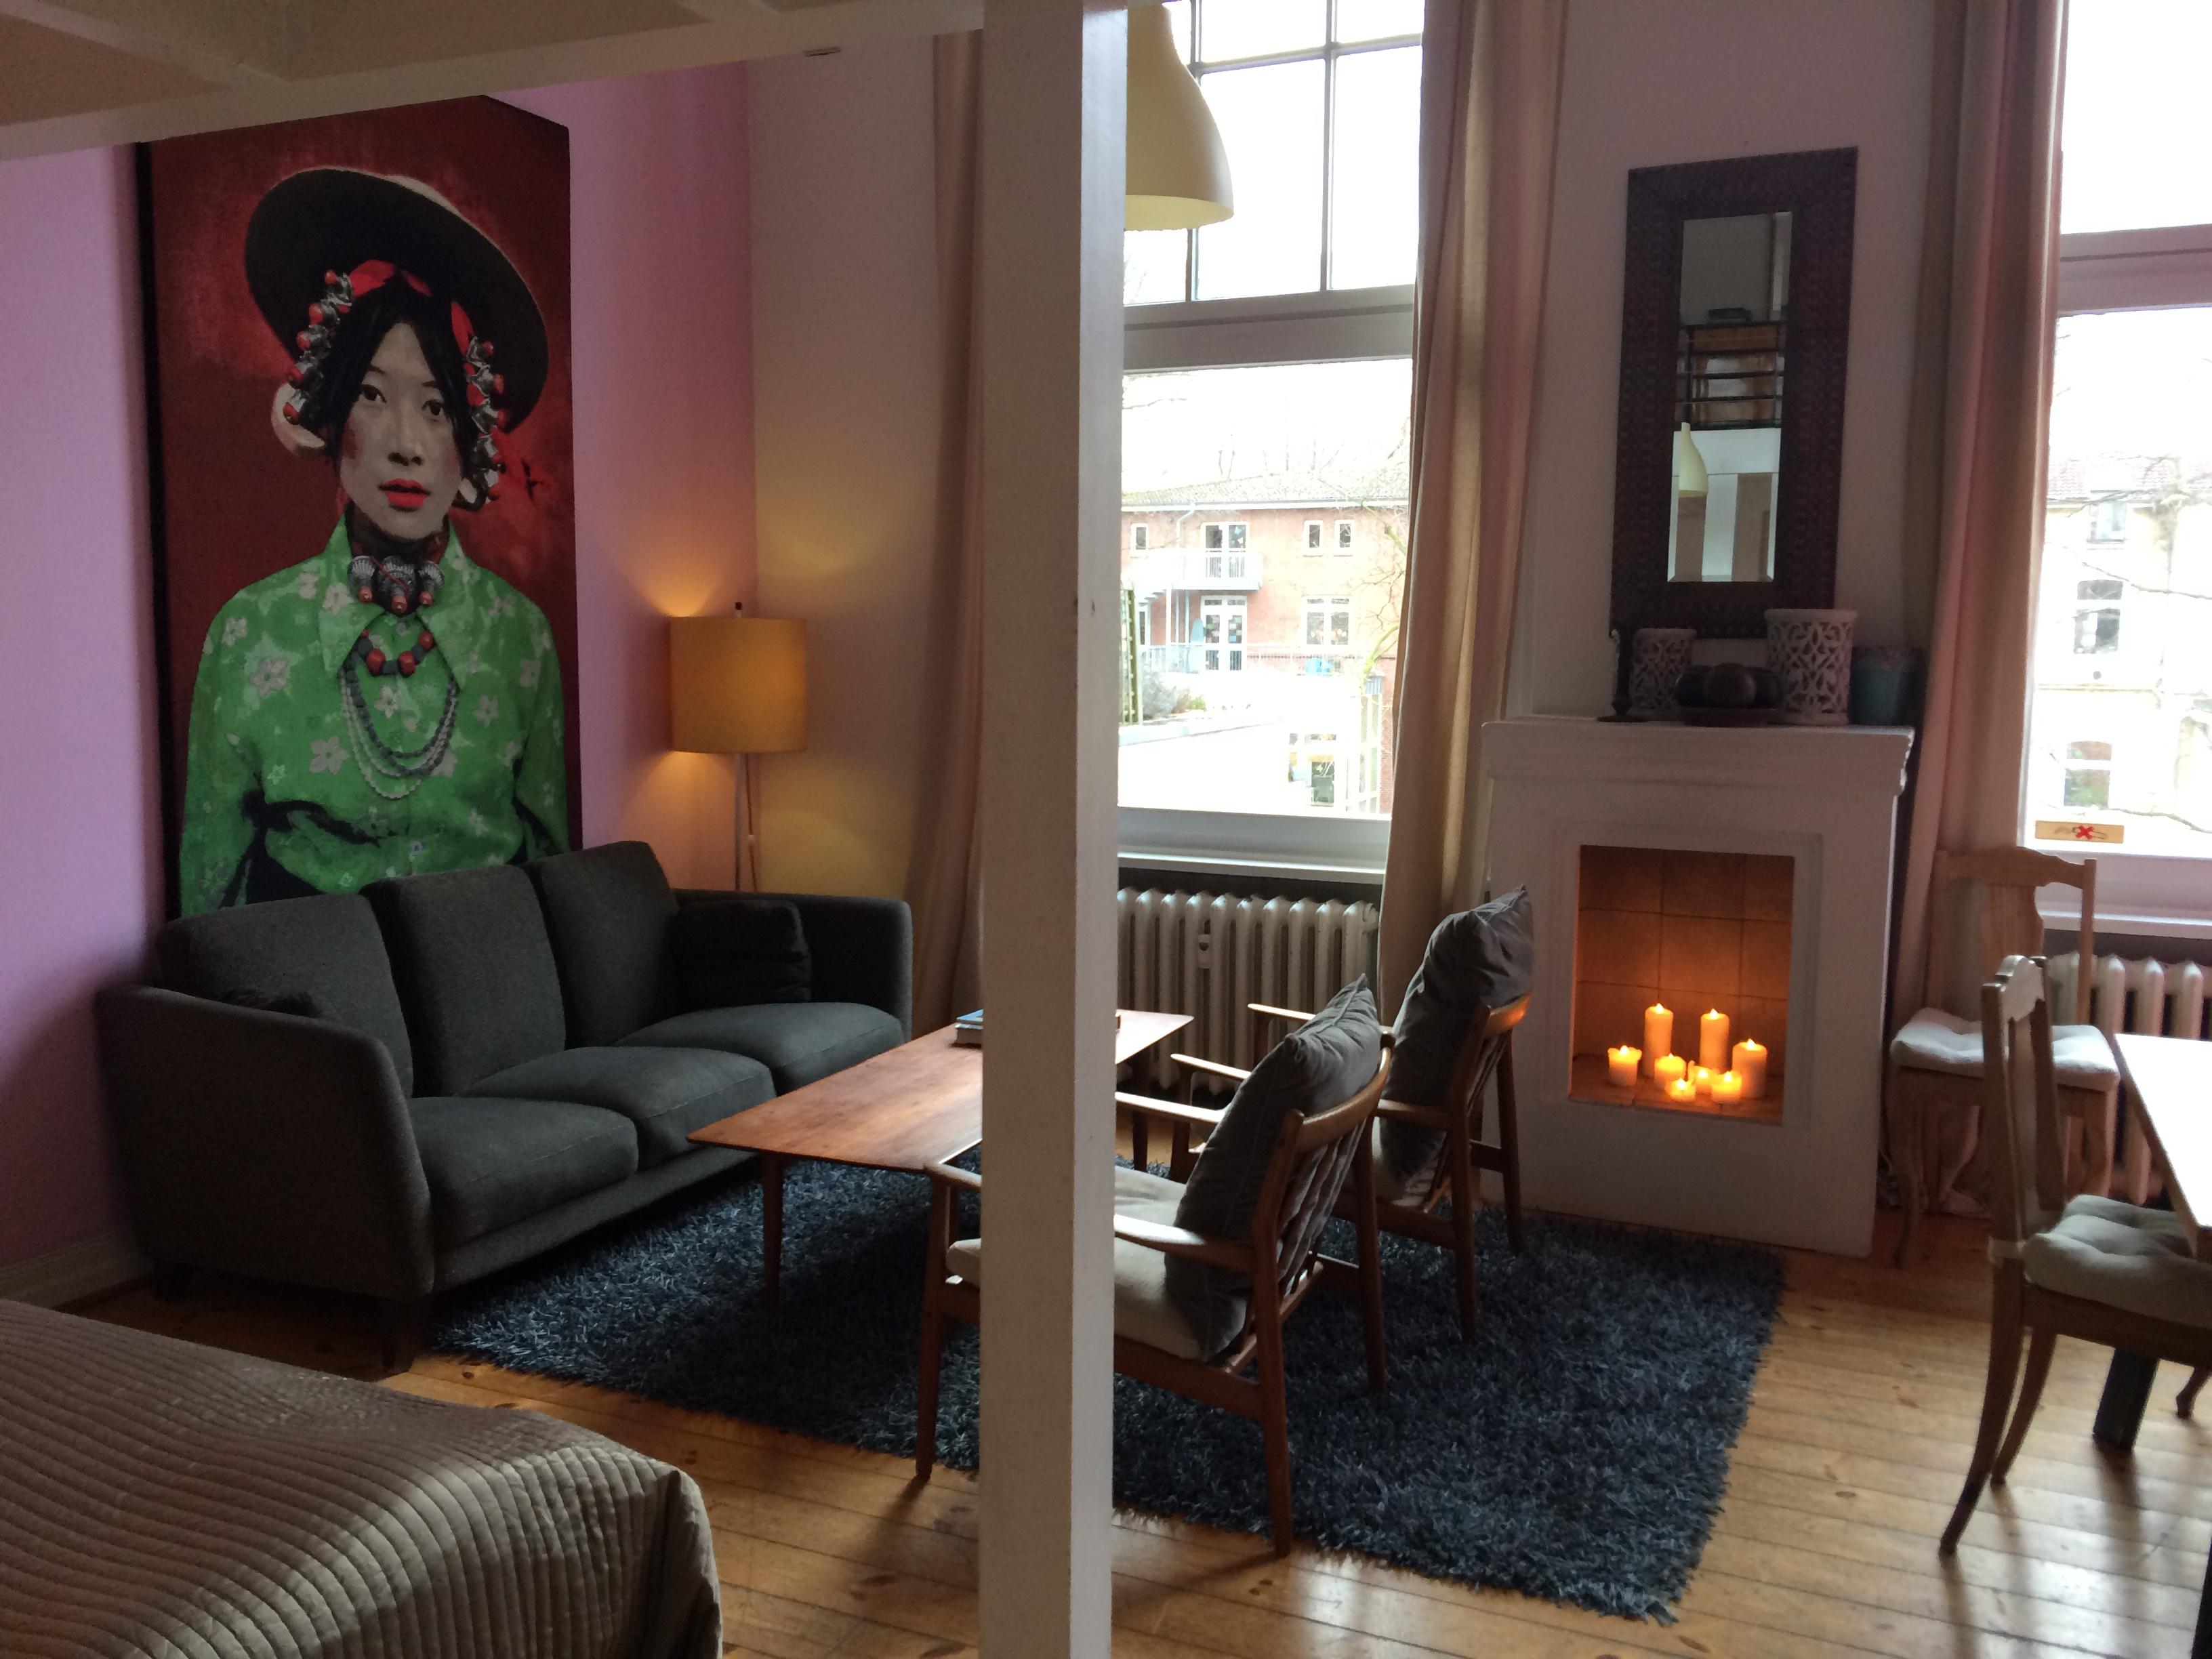 #Altrosa #Wandgestaltung im Hadley's B&B in #Hamburg. #sofa #altrosa #rosawandgestaltung #wohnzimmerfarben